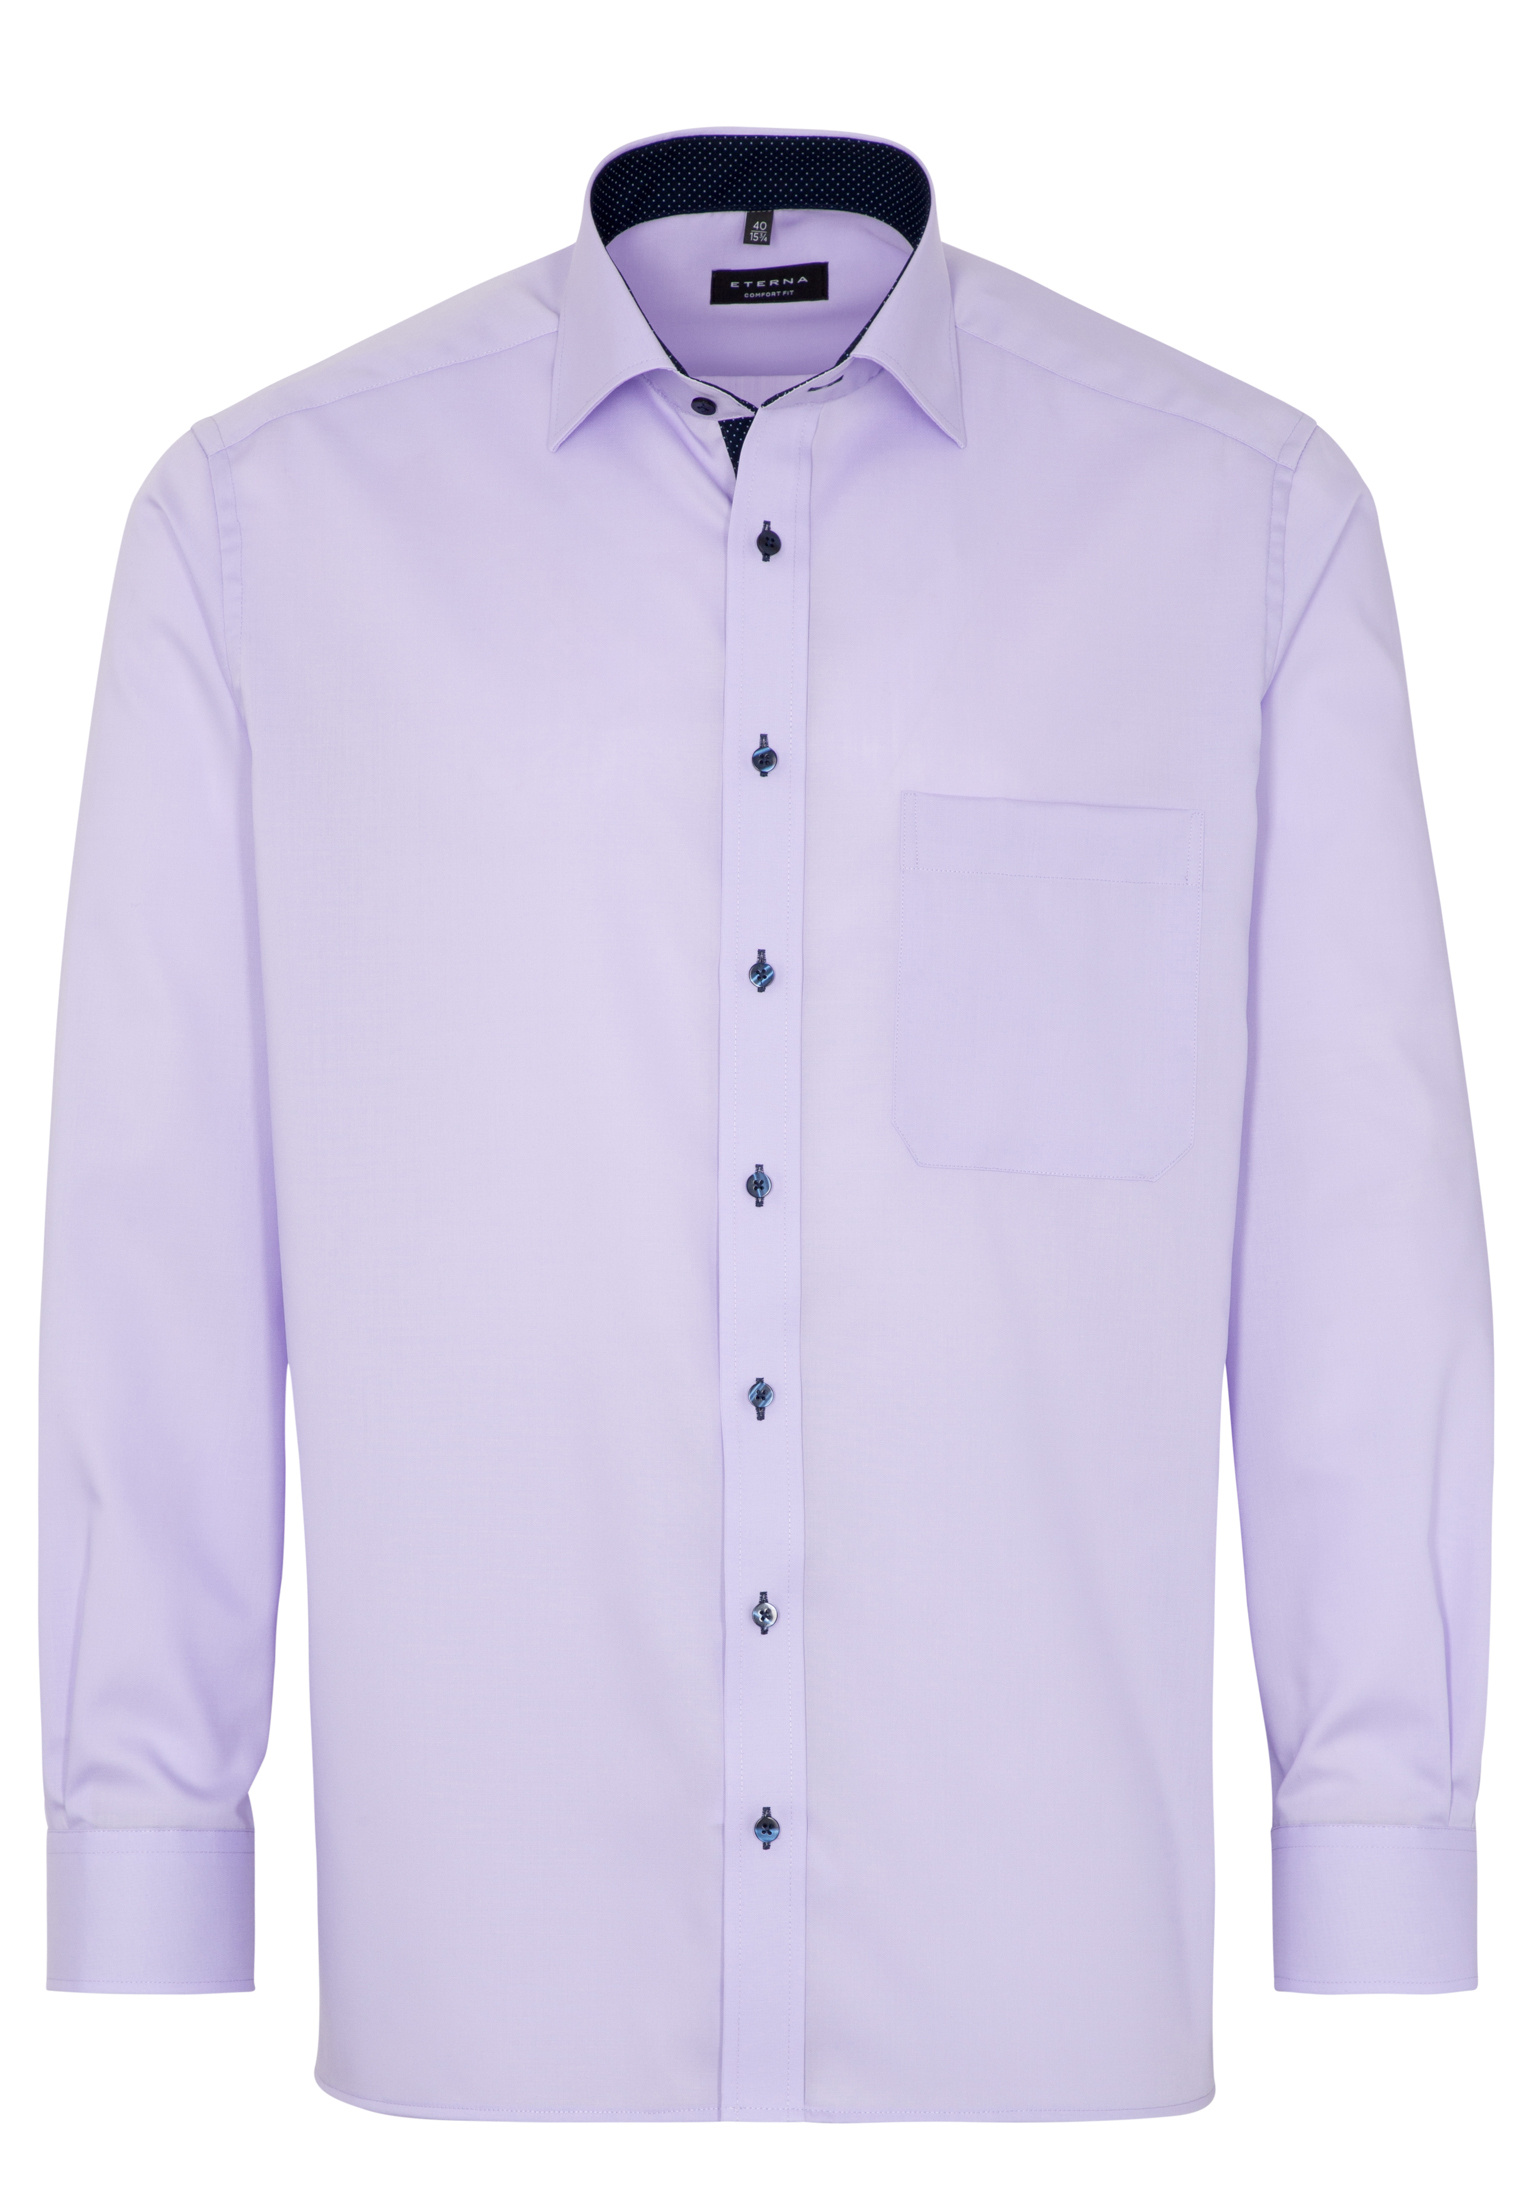 COMFORT FIT Shirt in lavender plain